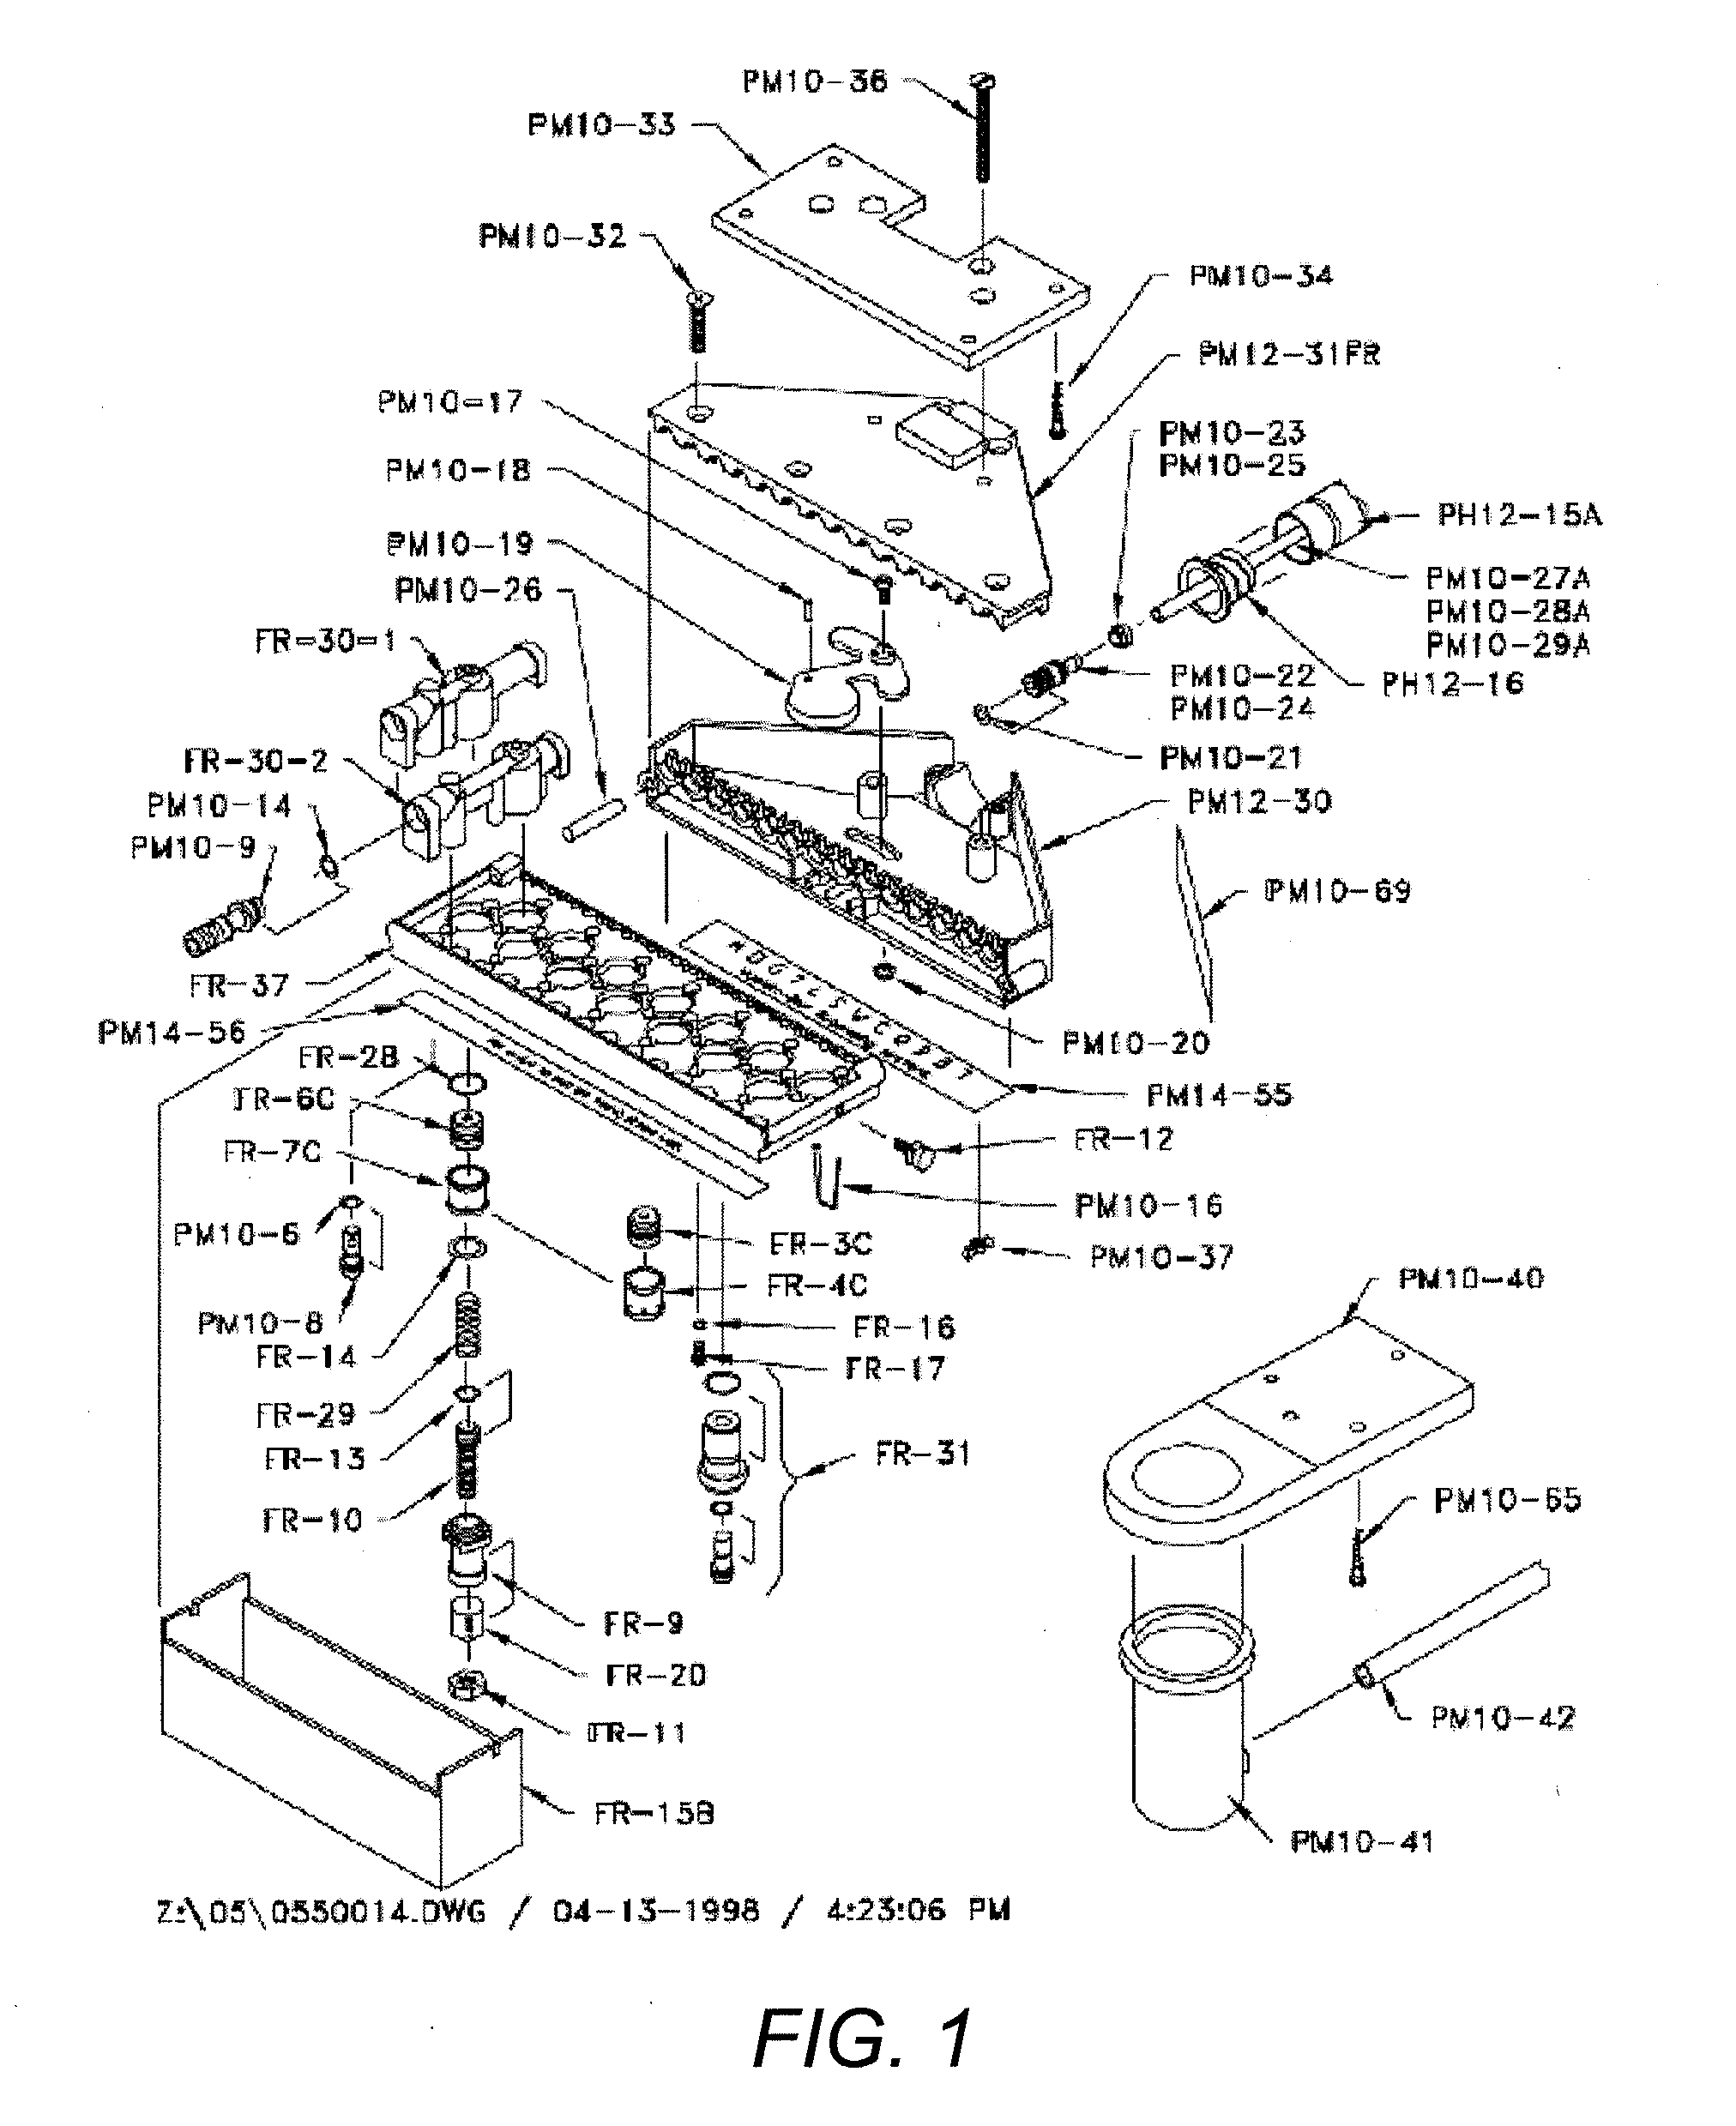 Elastomeric flow control device for a bar gun manifold